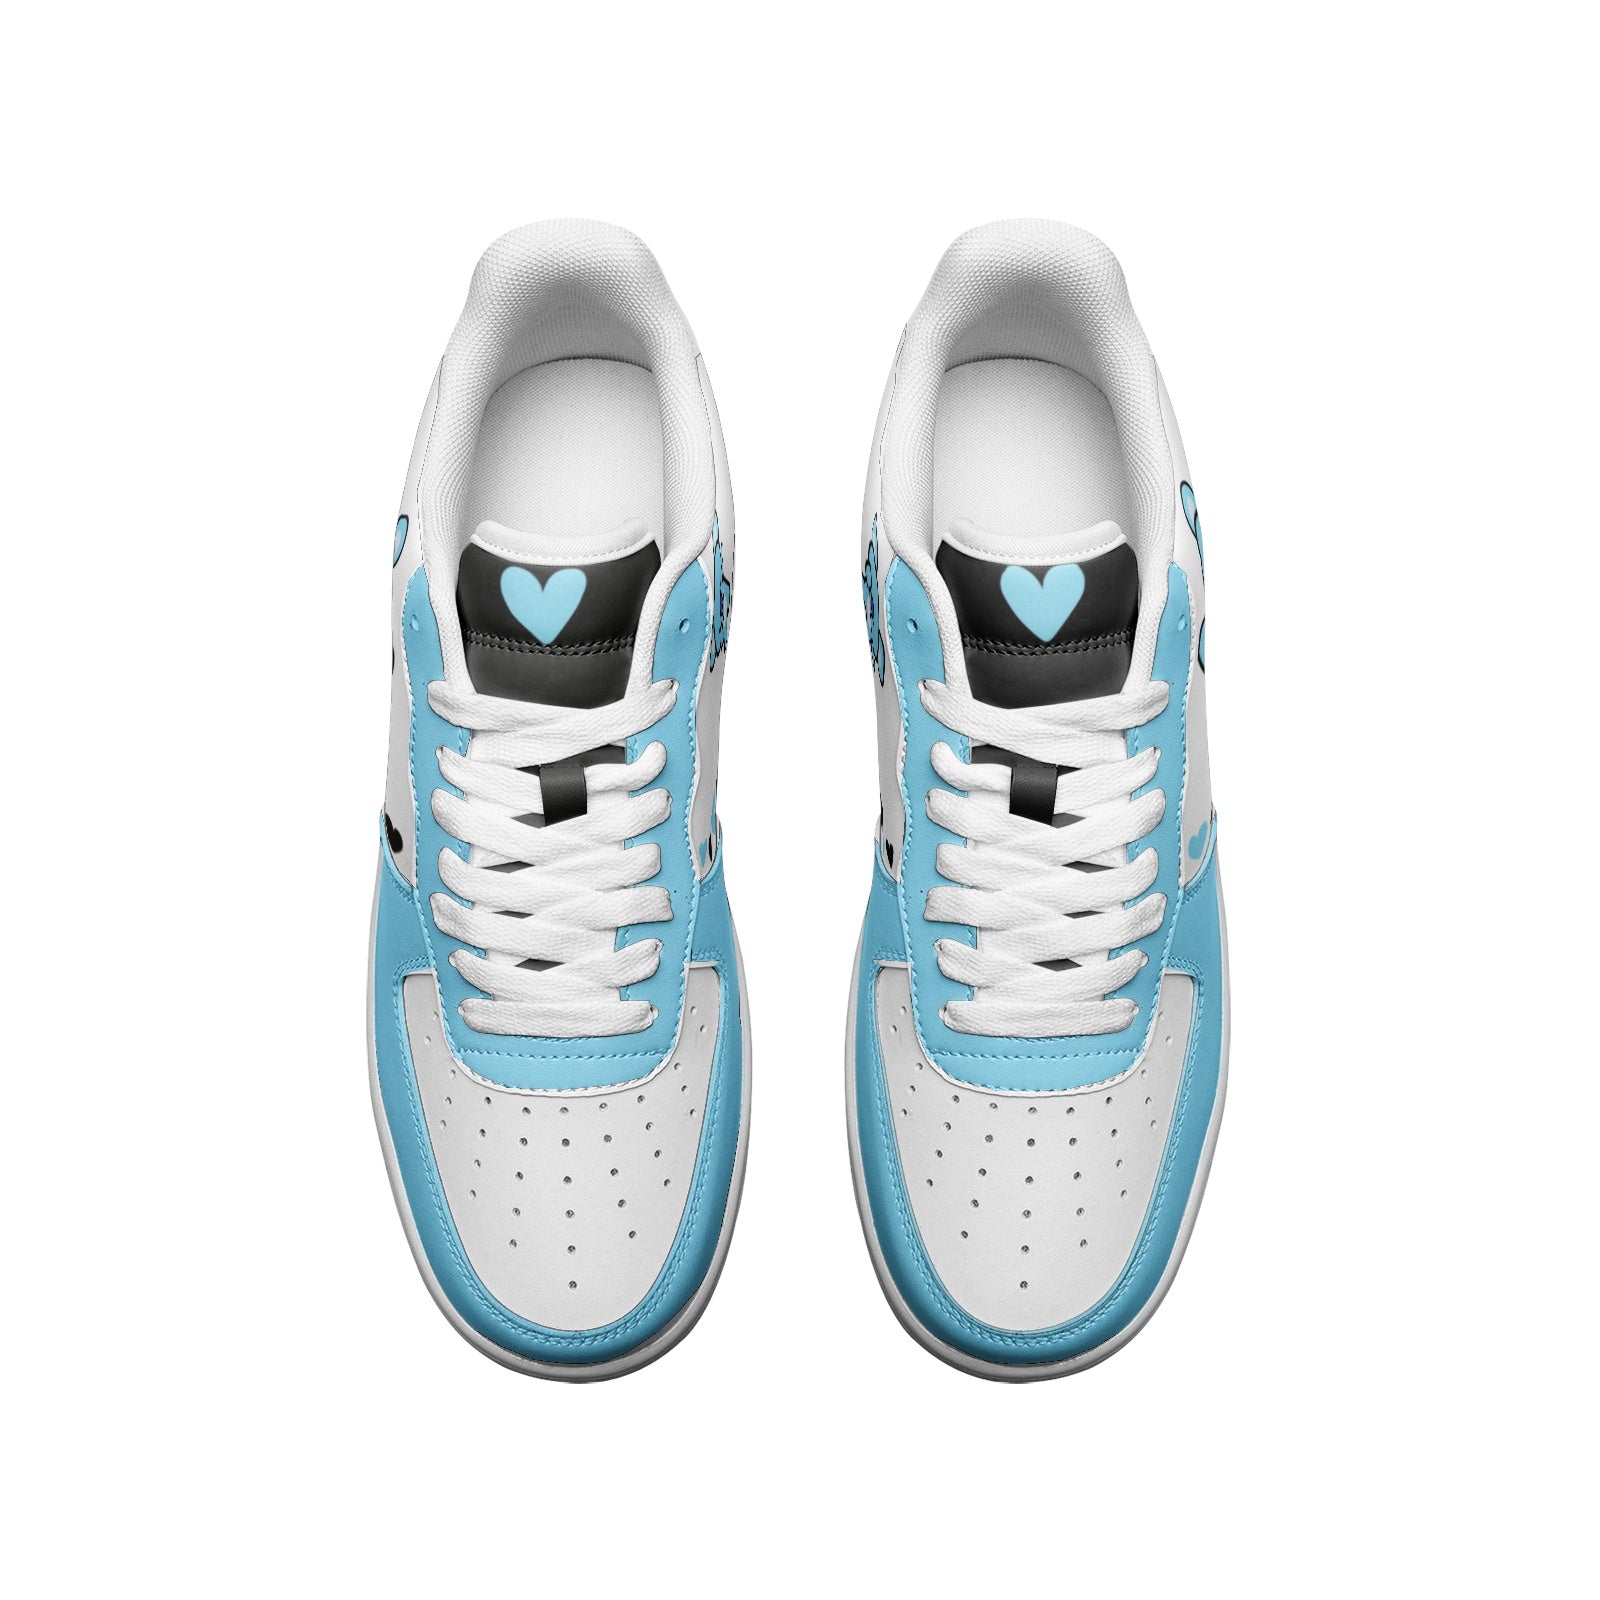 BT21 Koya Unisex Low Top Leather Sneakers - Blue BTS shoes - SD-style-shop